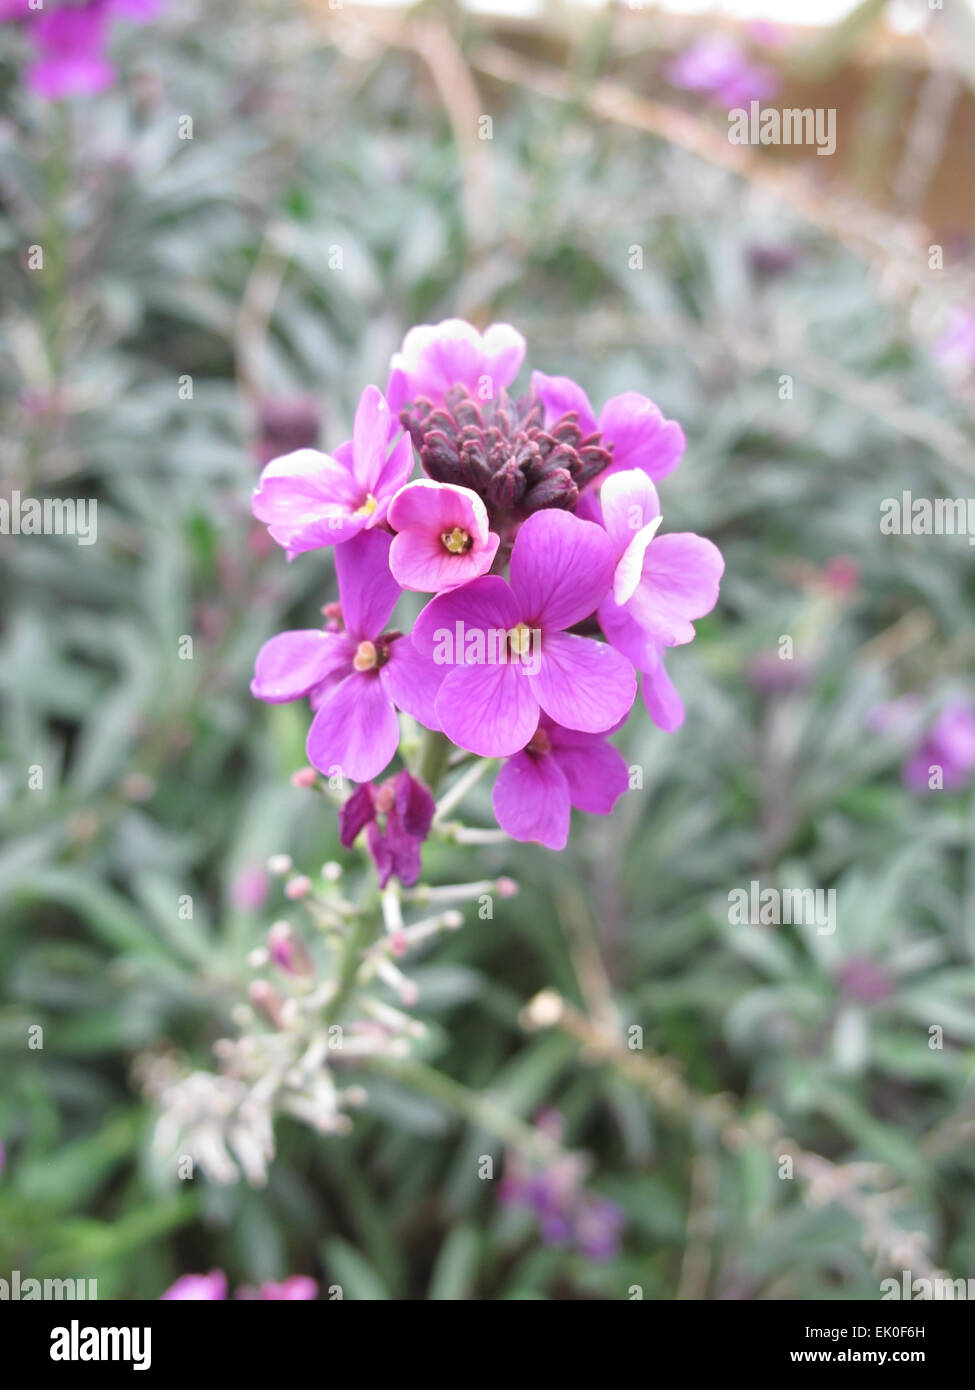 The Beautiful purple garden flower Erysimum Stock Photo